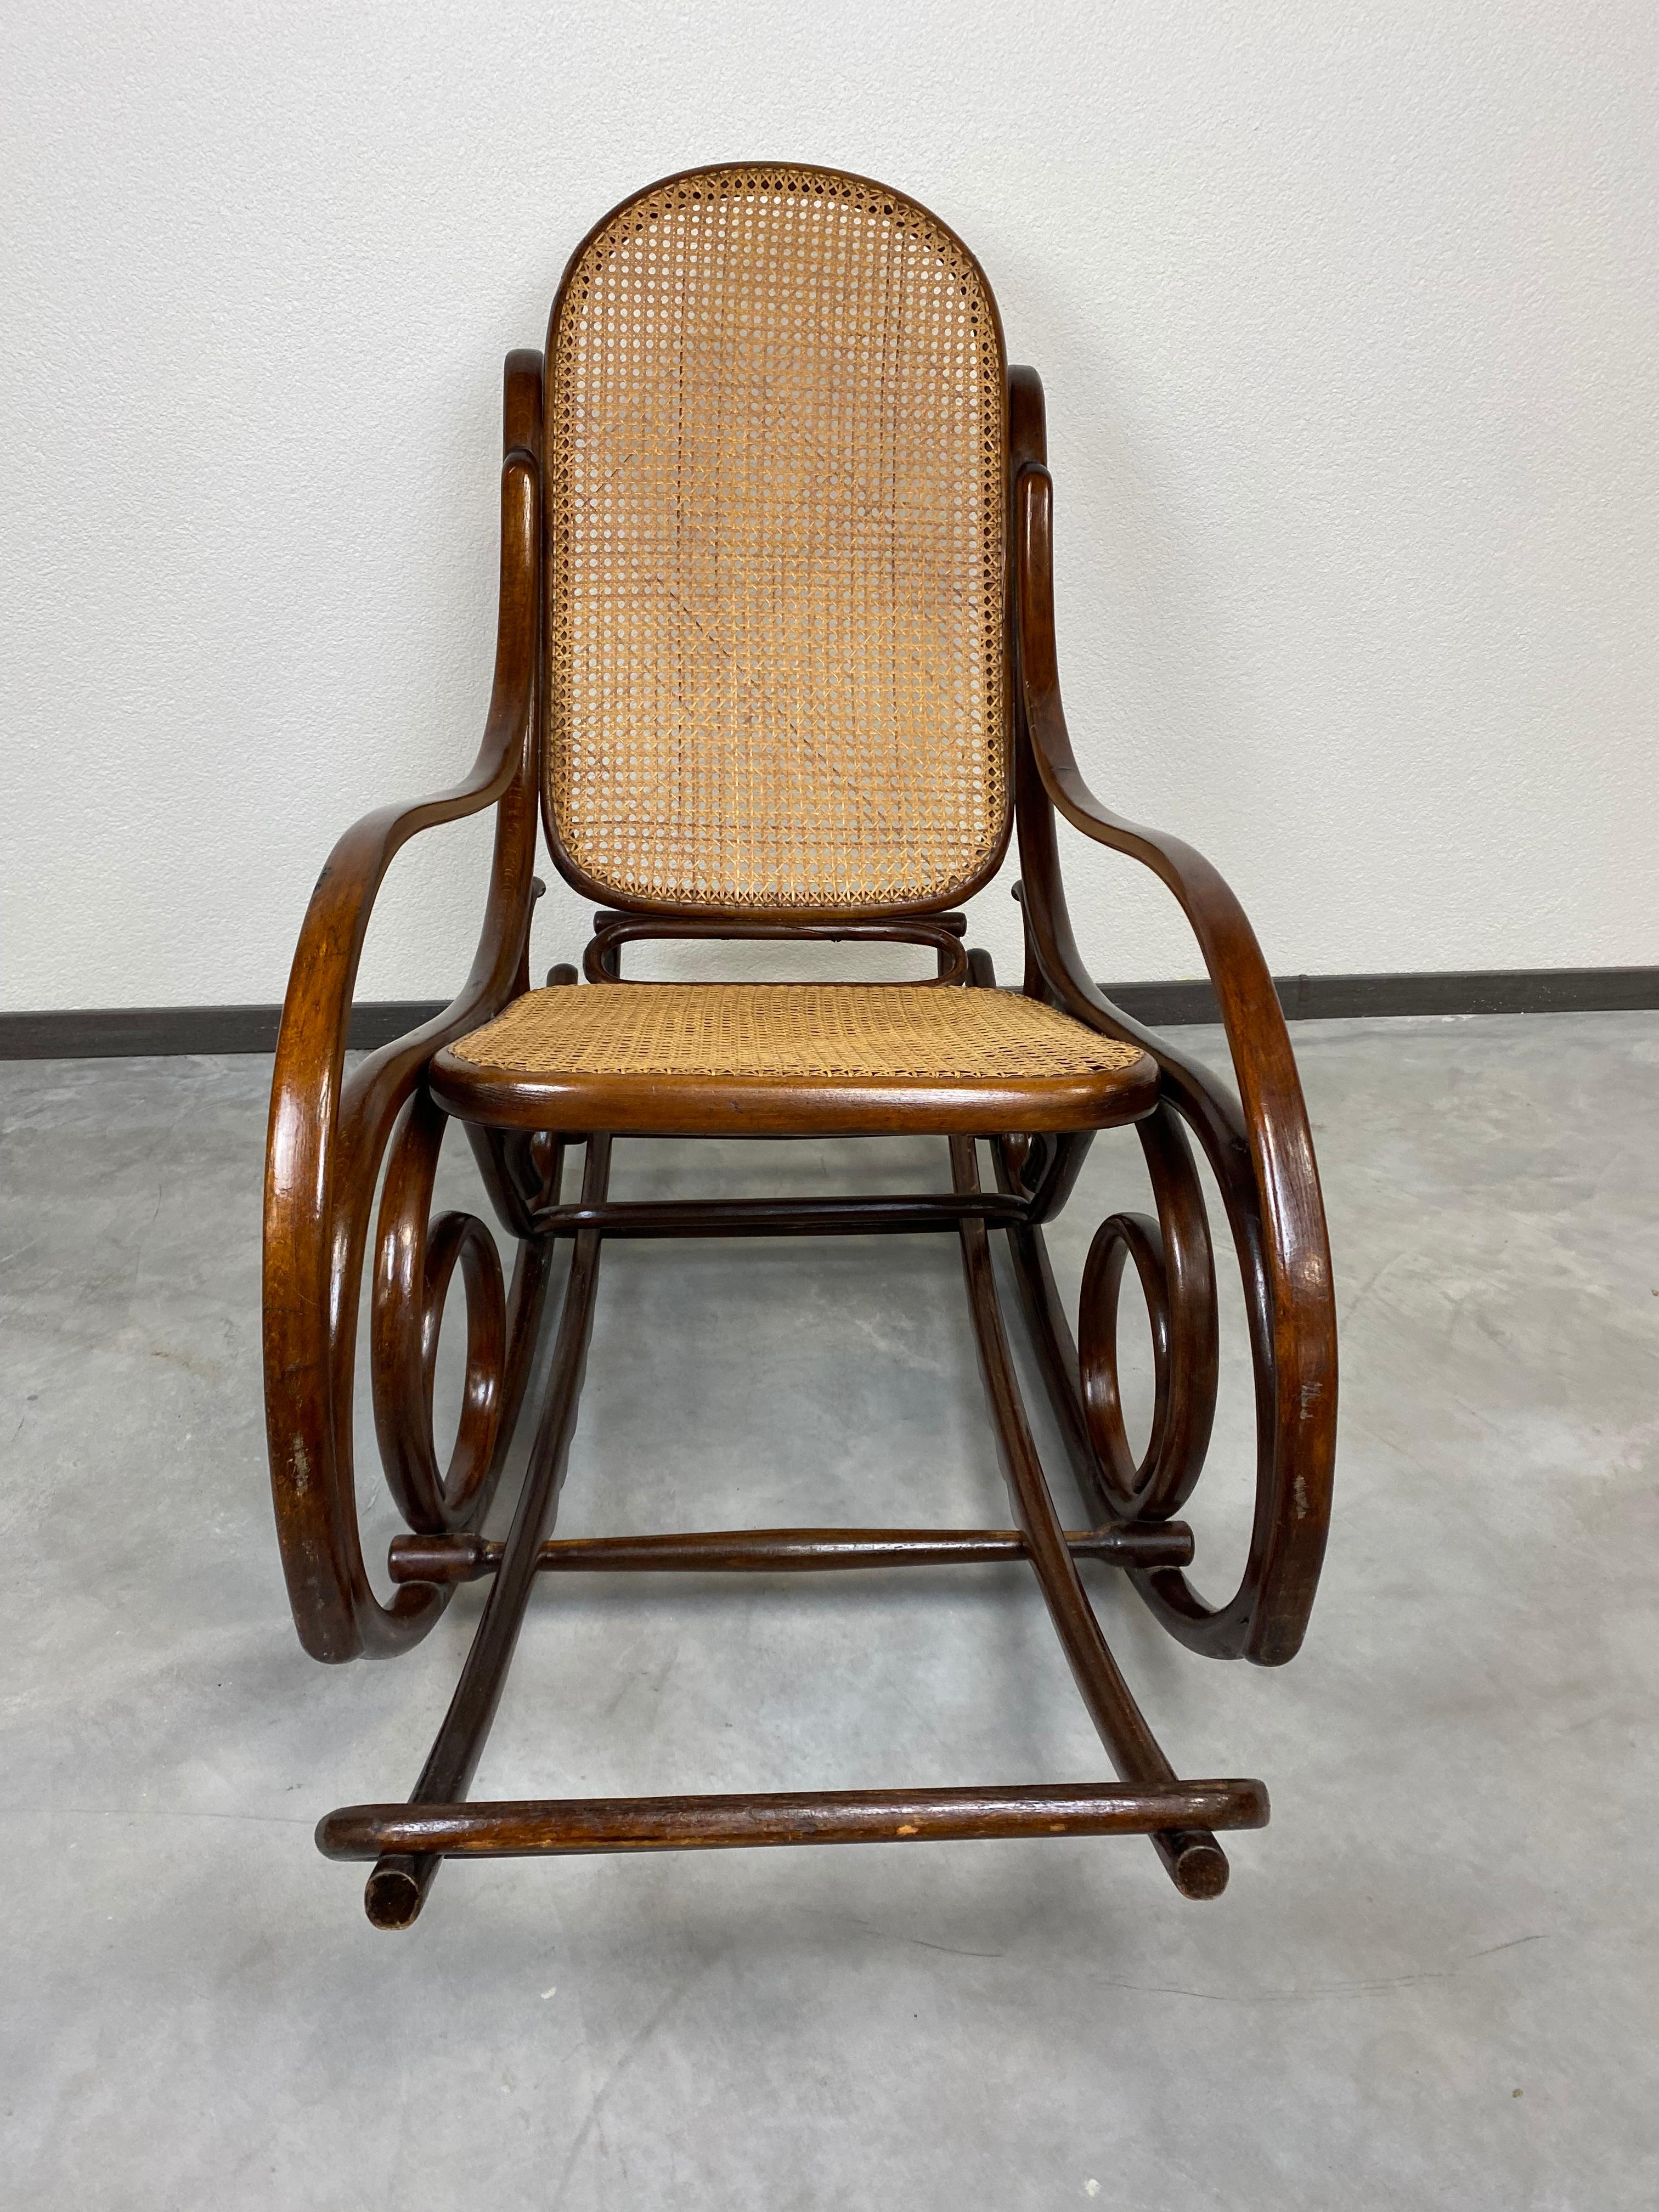 Thonet rocking chair no.7014 in very good original condition. Original rattan seat.